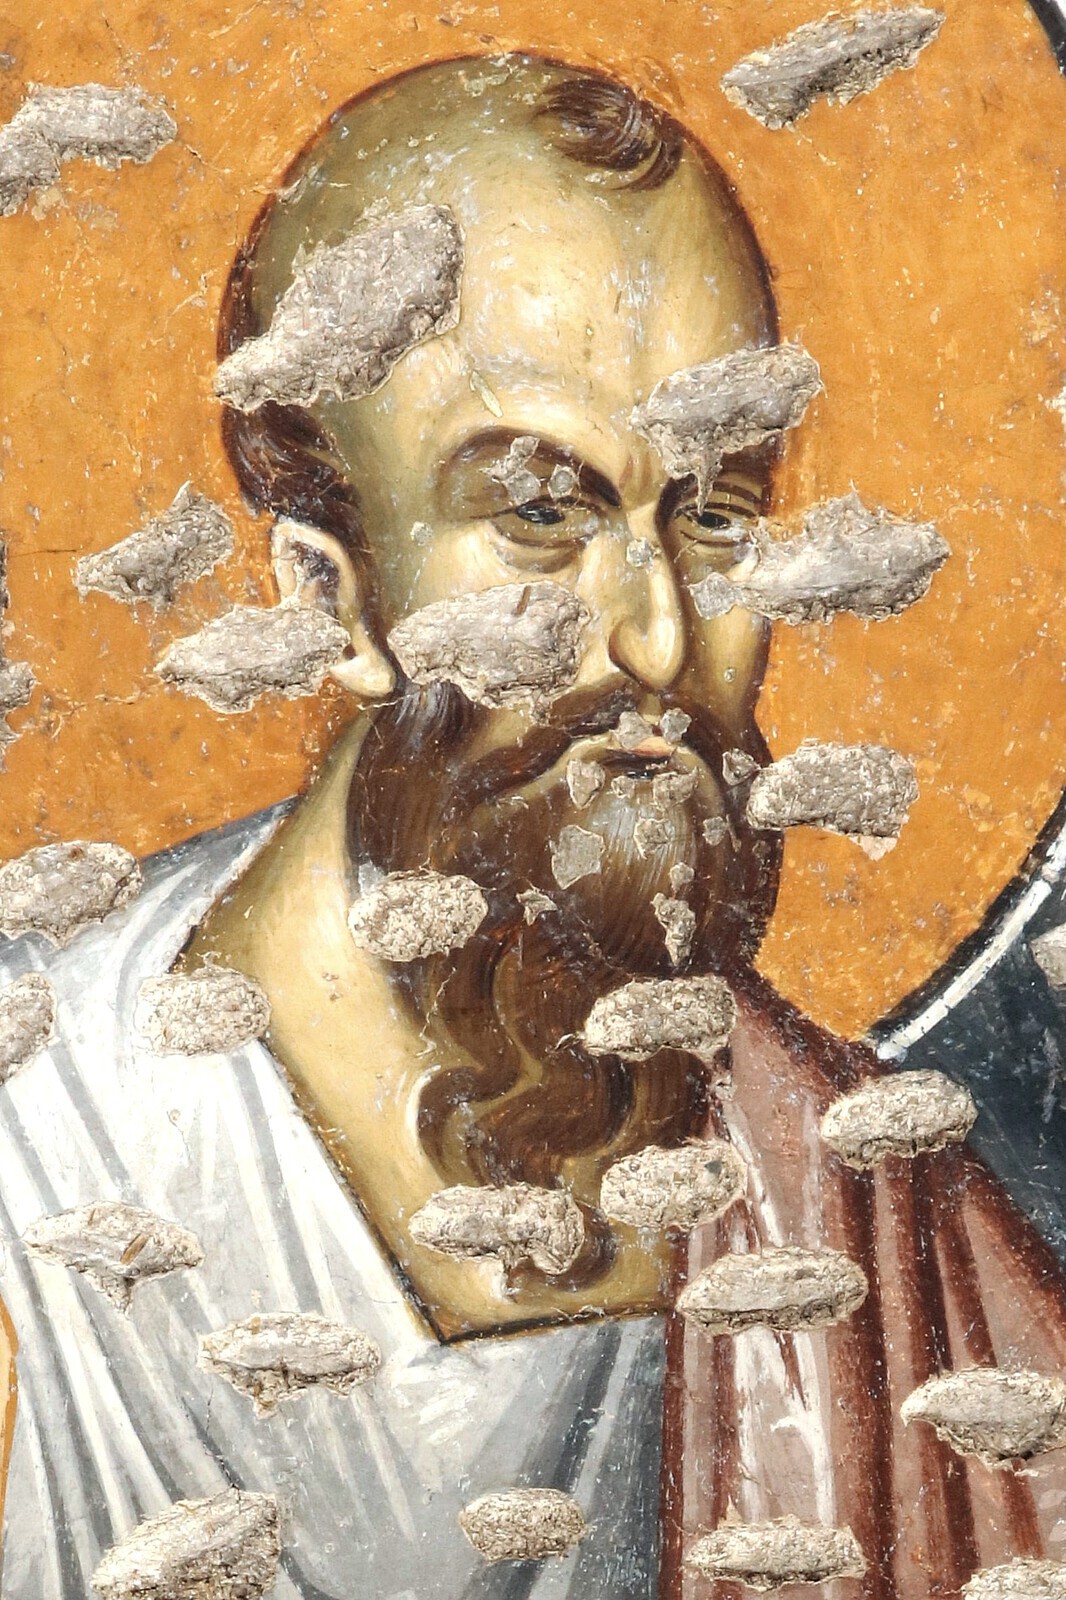 St. Paul the Apostle